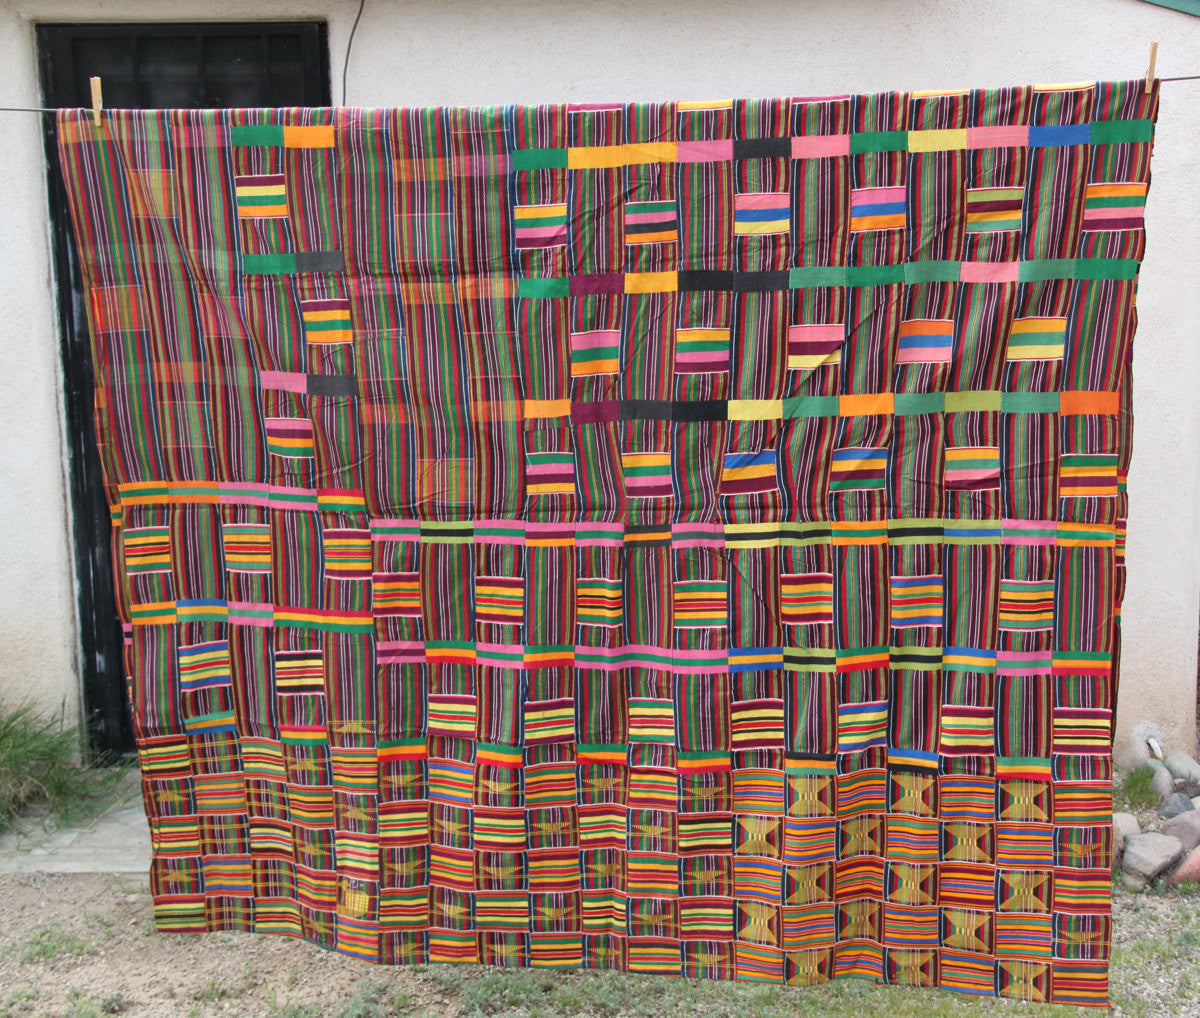 Ewe Kente Cloth from Ghana, Africa / Vintage (1970's), Tribal Woven Textile, Multi-Colored, Large / Wall Hanging, Interior Design, Decor - ShopWomanShopsWorld.com. Bone Beads, Tassels, Pom Poms, African Beads.